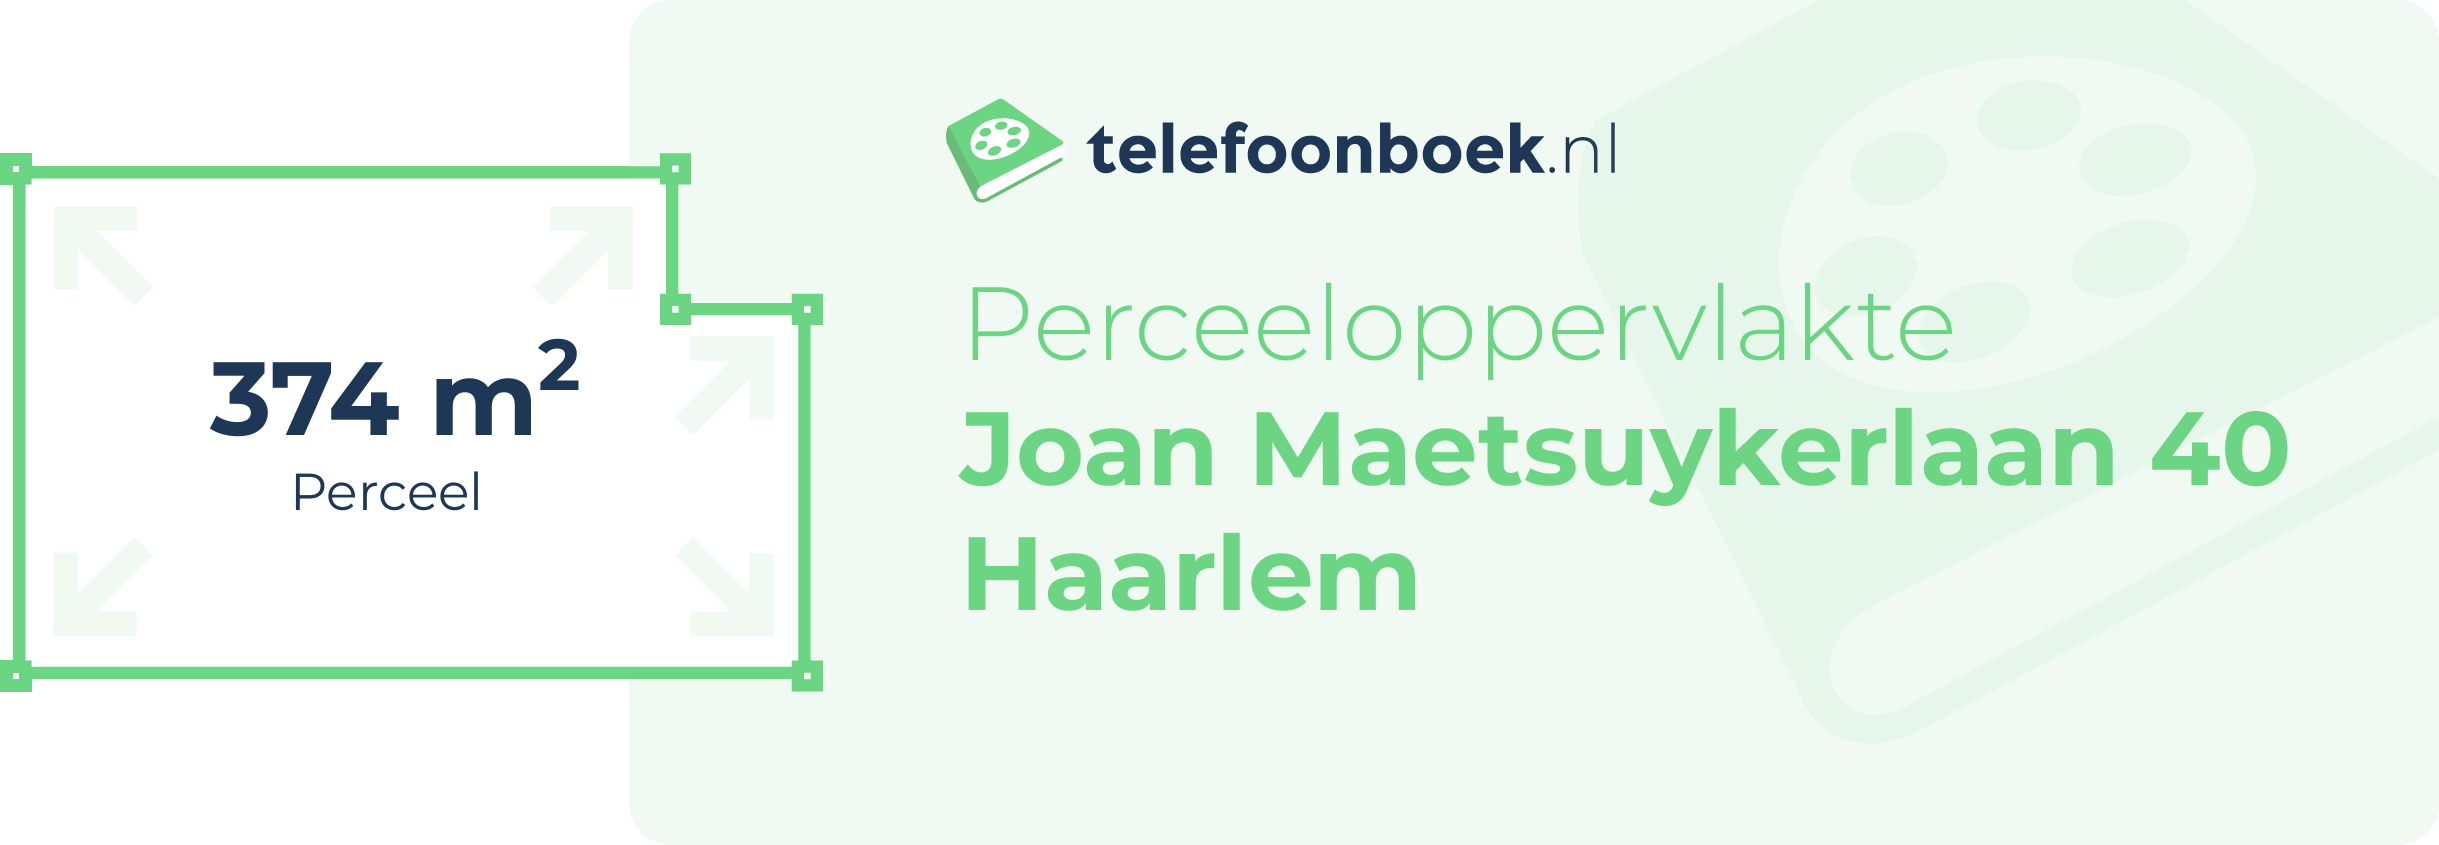 Perceeloppervlakte Joan Maetsuykerlaan 40 Haarlem